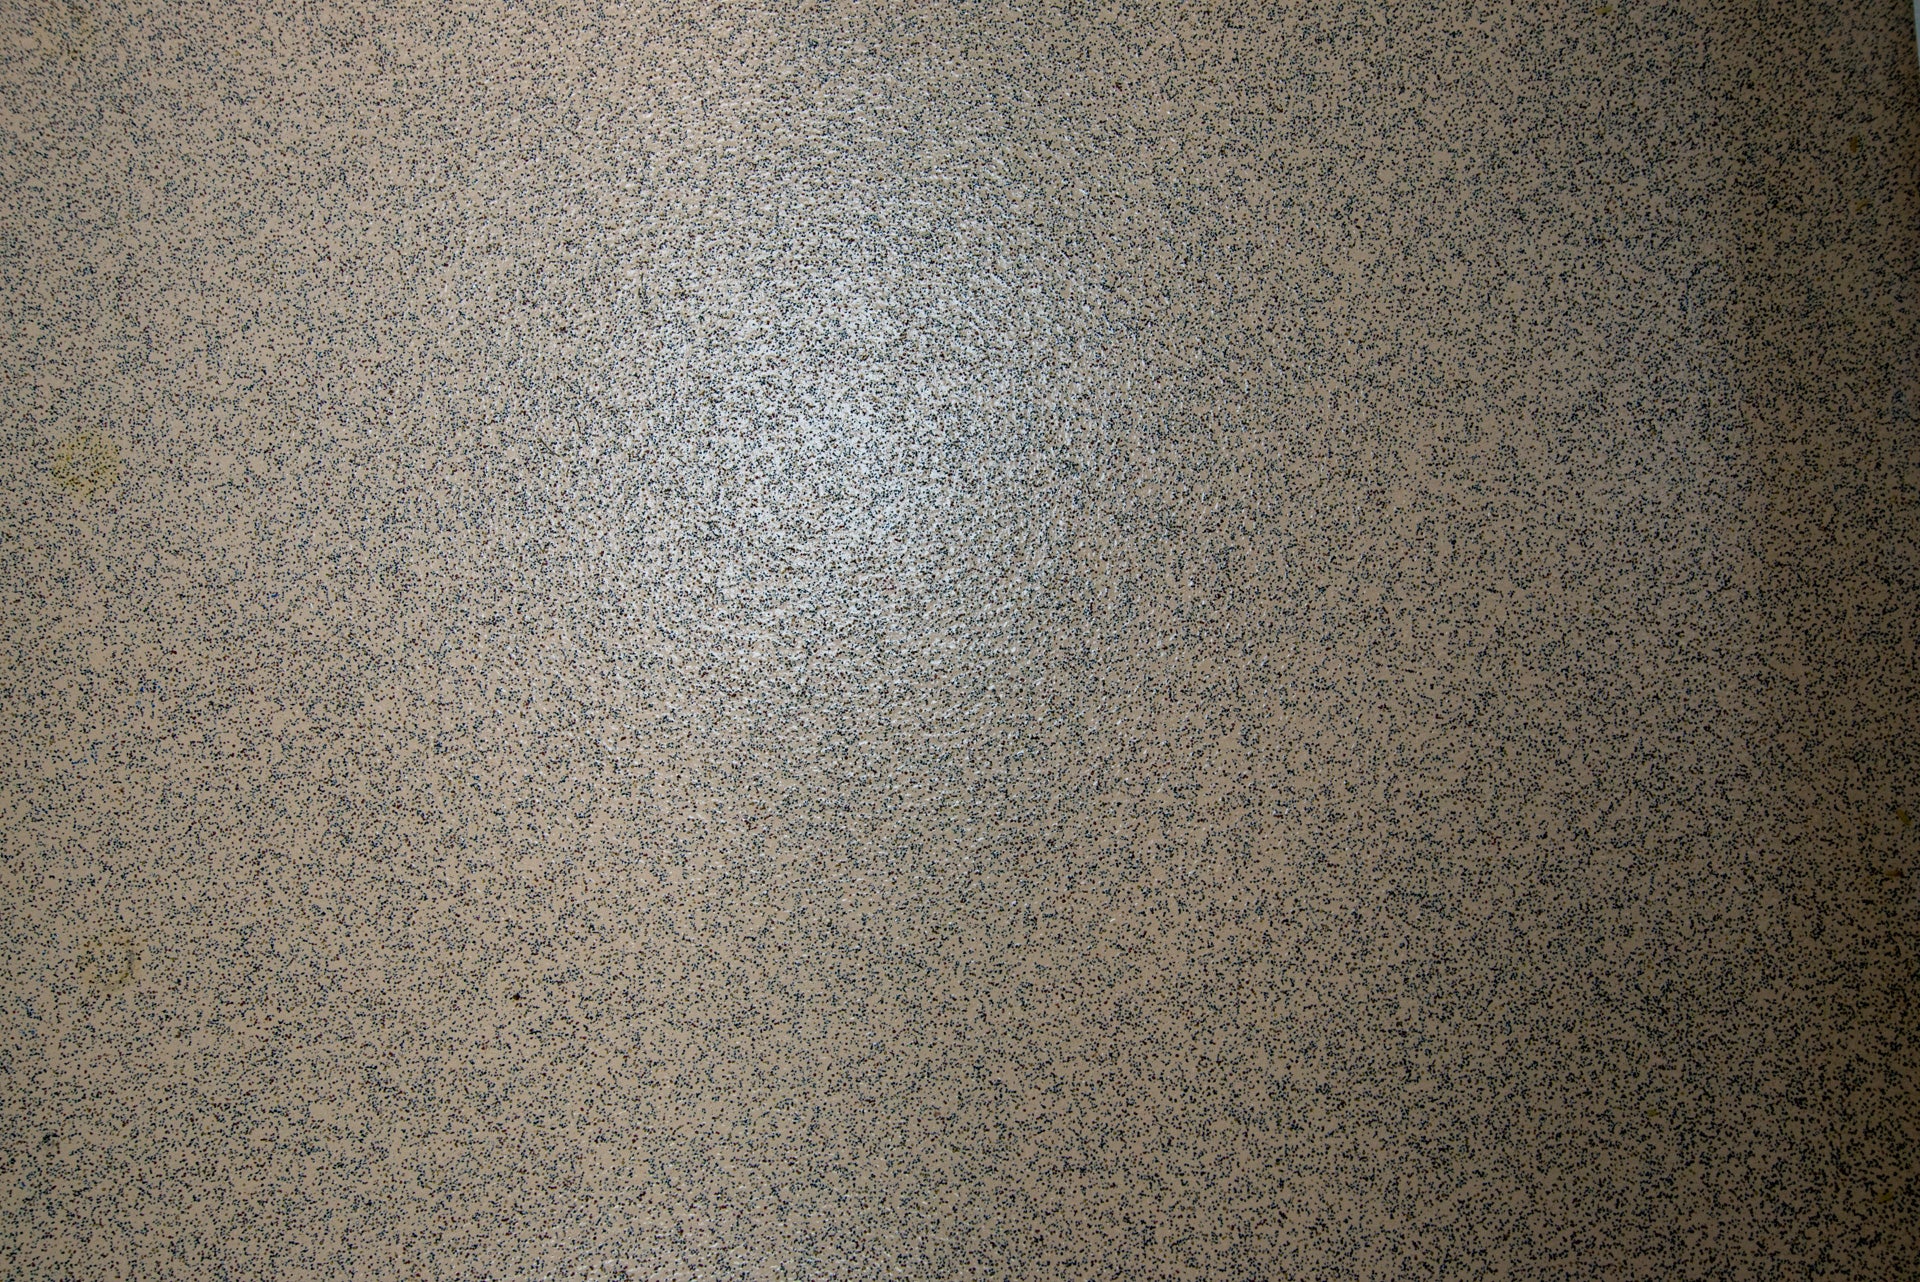 Tineco Pure One S15 Pro limpia suelos duros